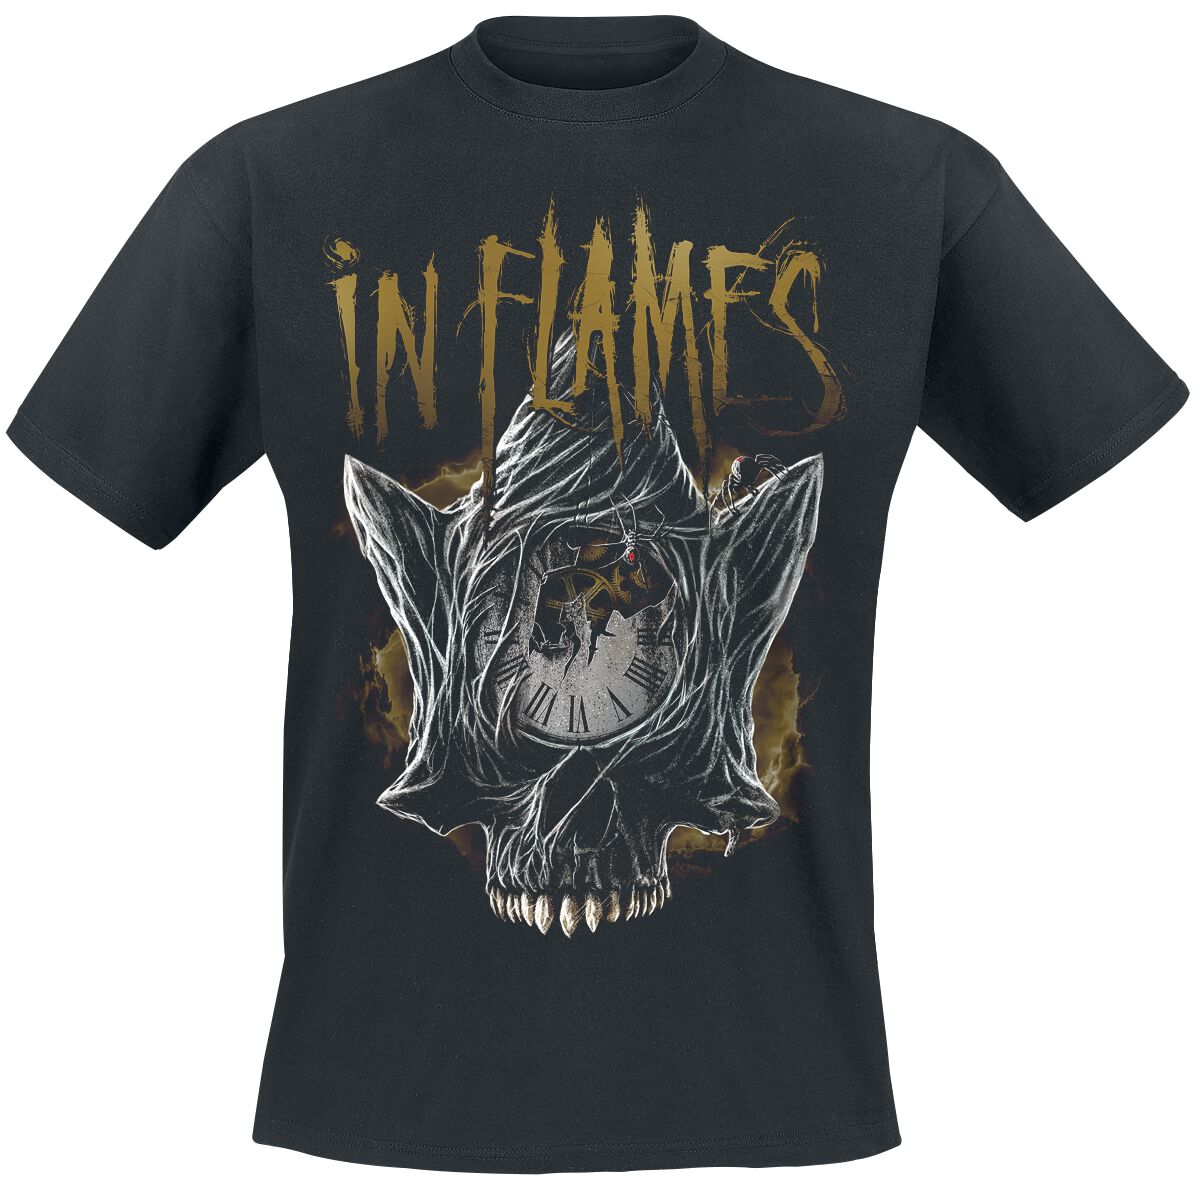 In Flames Foregone Skull T-Shirt schwarz in M